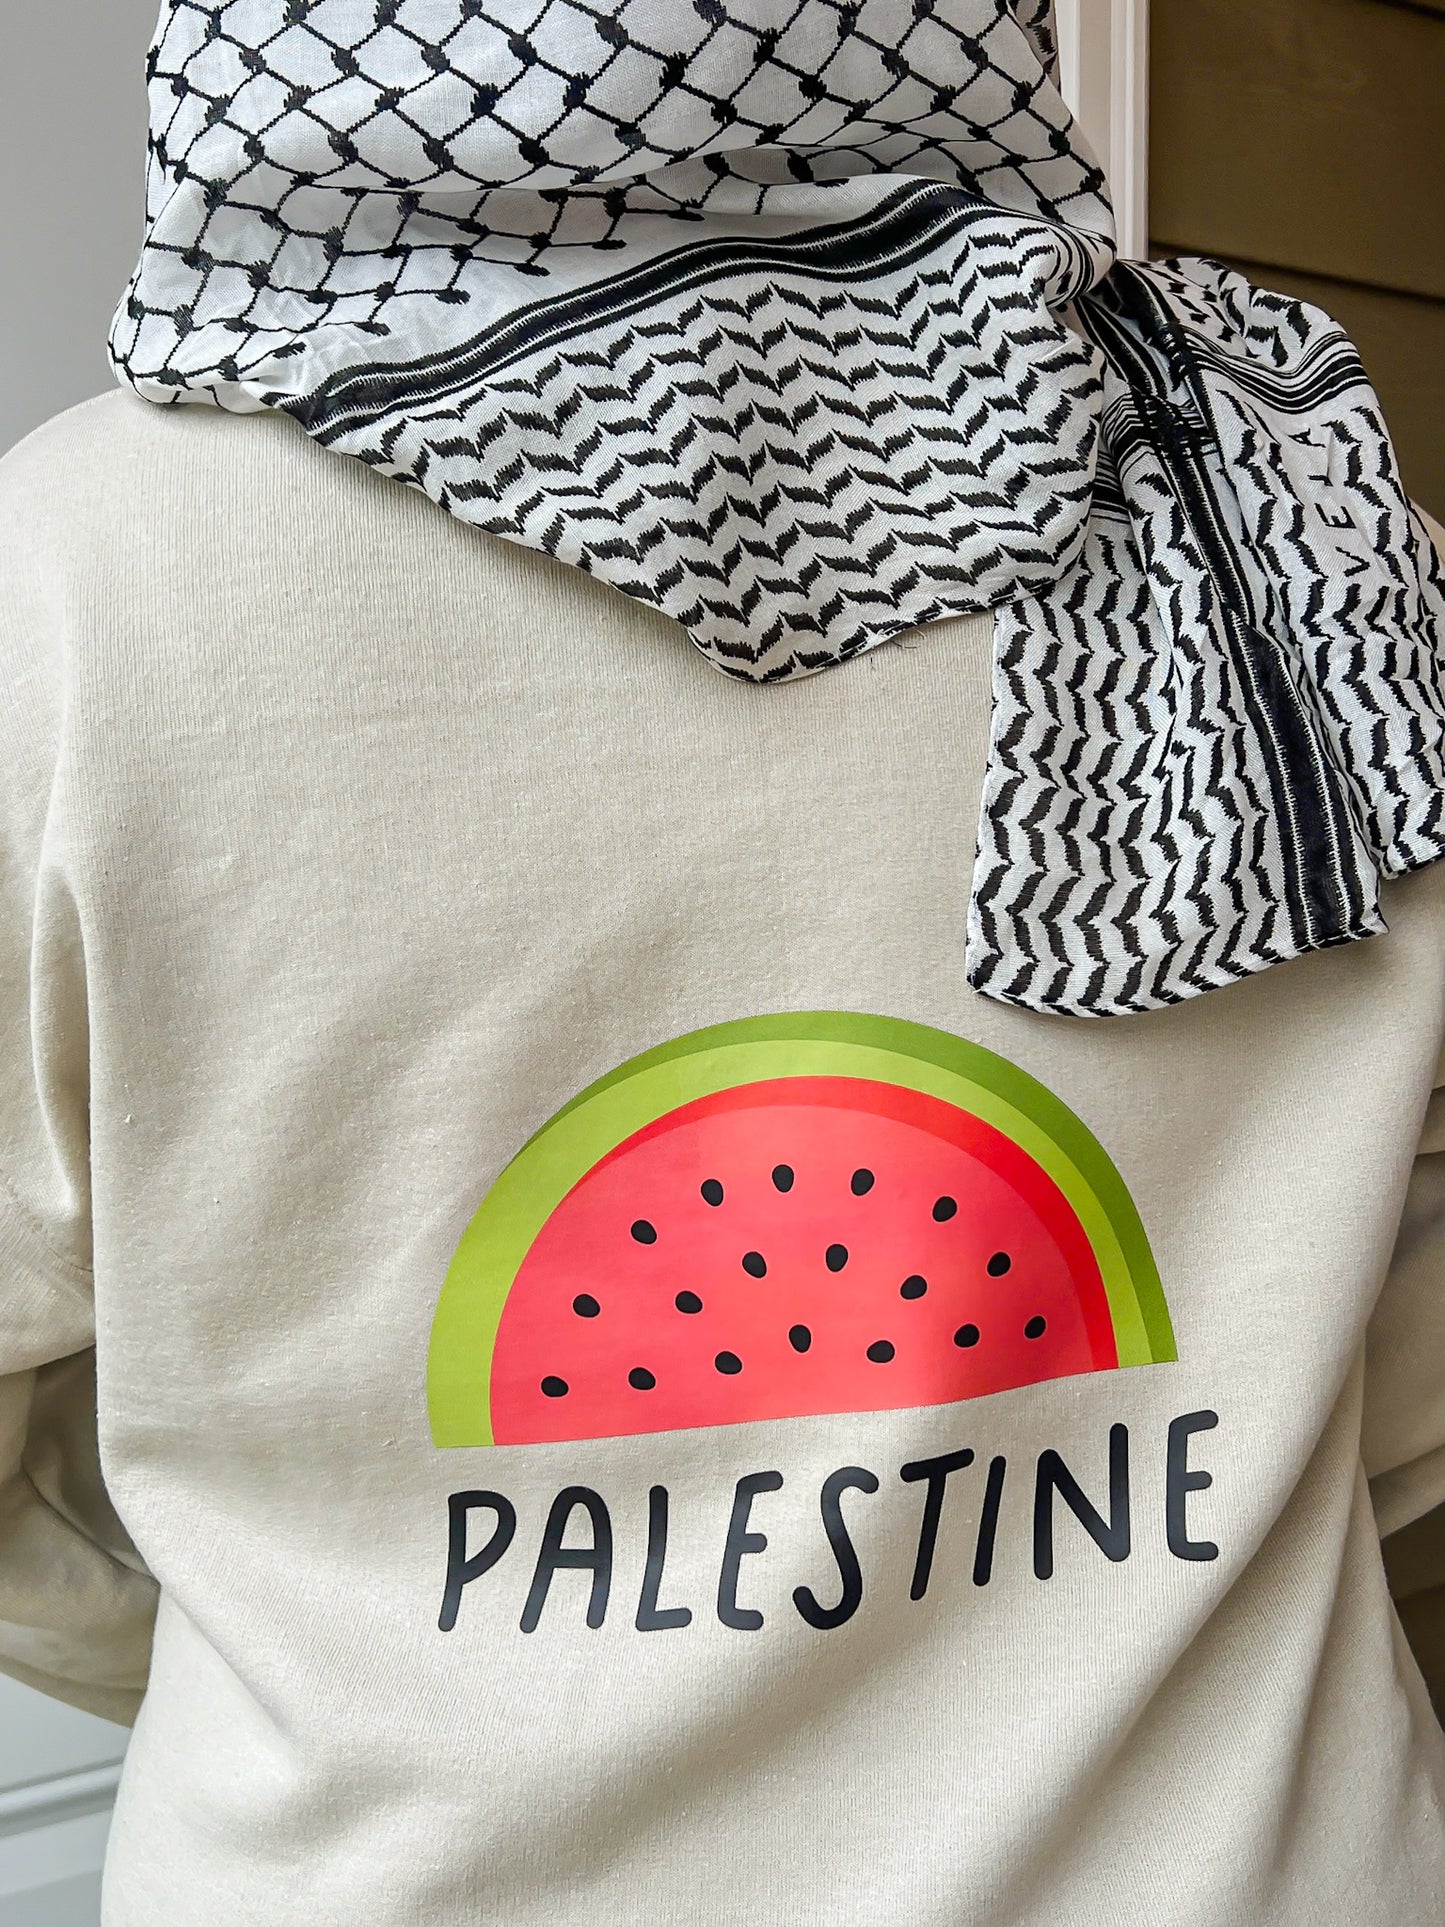 Free Palestine Watermelon Crew 🍉